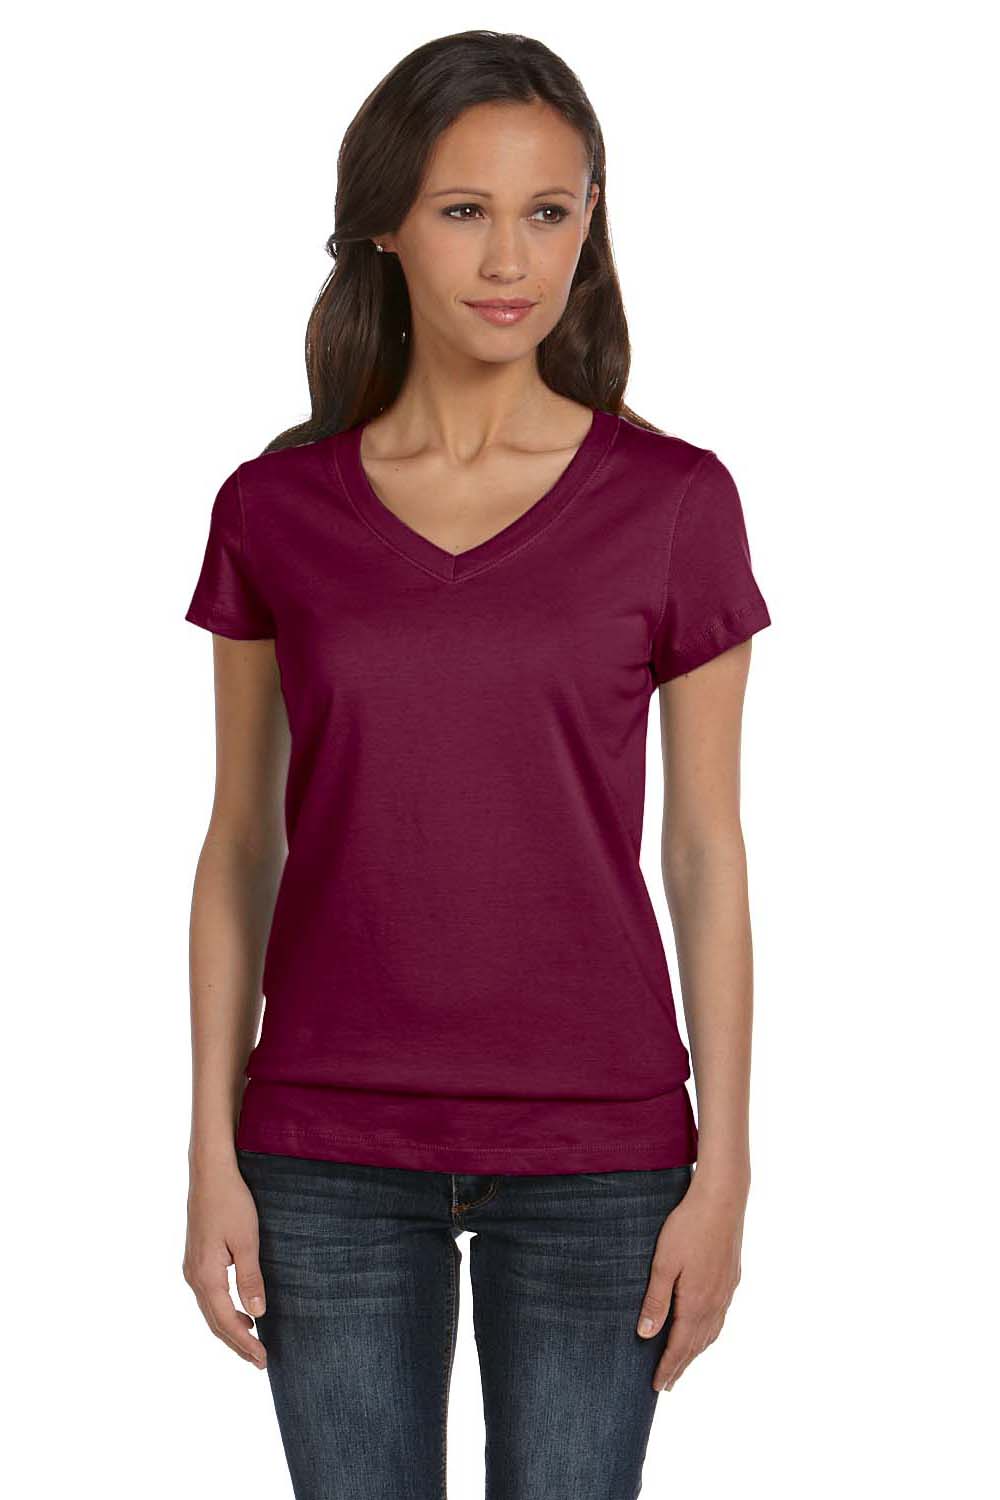 Bella + Canvas B6005 Womens Jersey Short Sleeve V-Neck T-Shirt Maroon Front